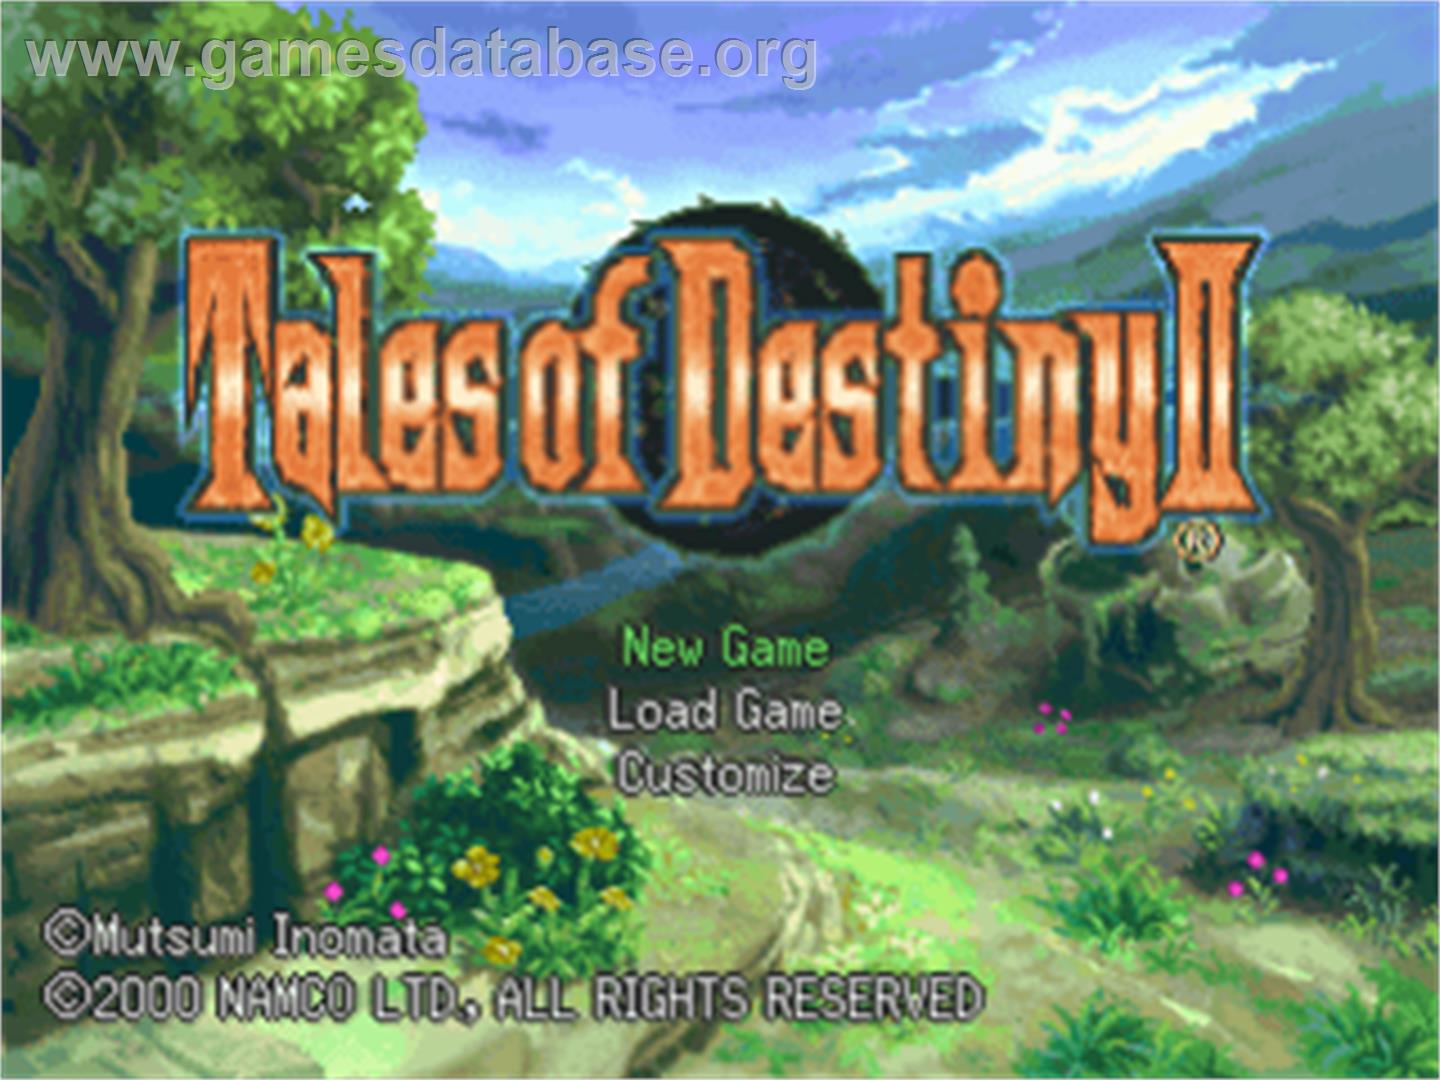 Tales of Destiny II - Sony Playstation - Artwork - Title Screen